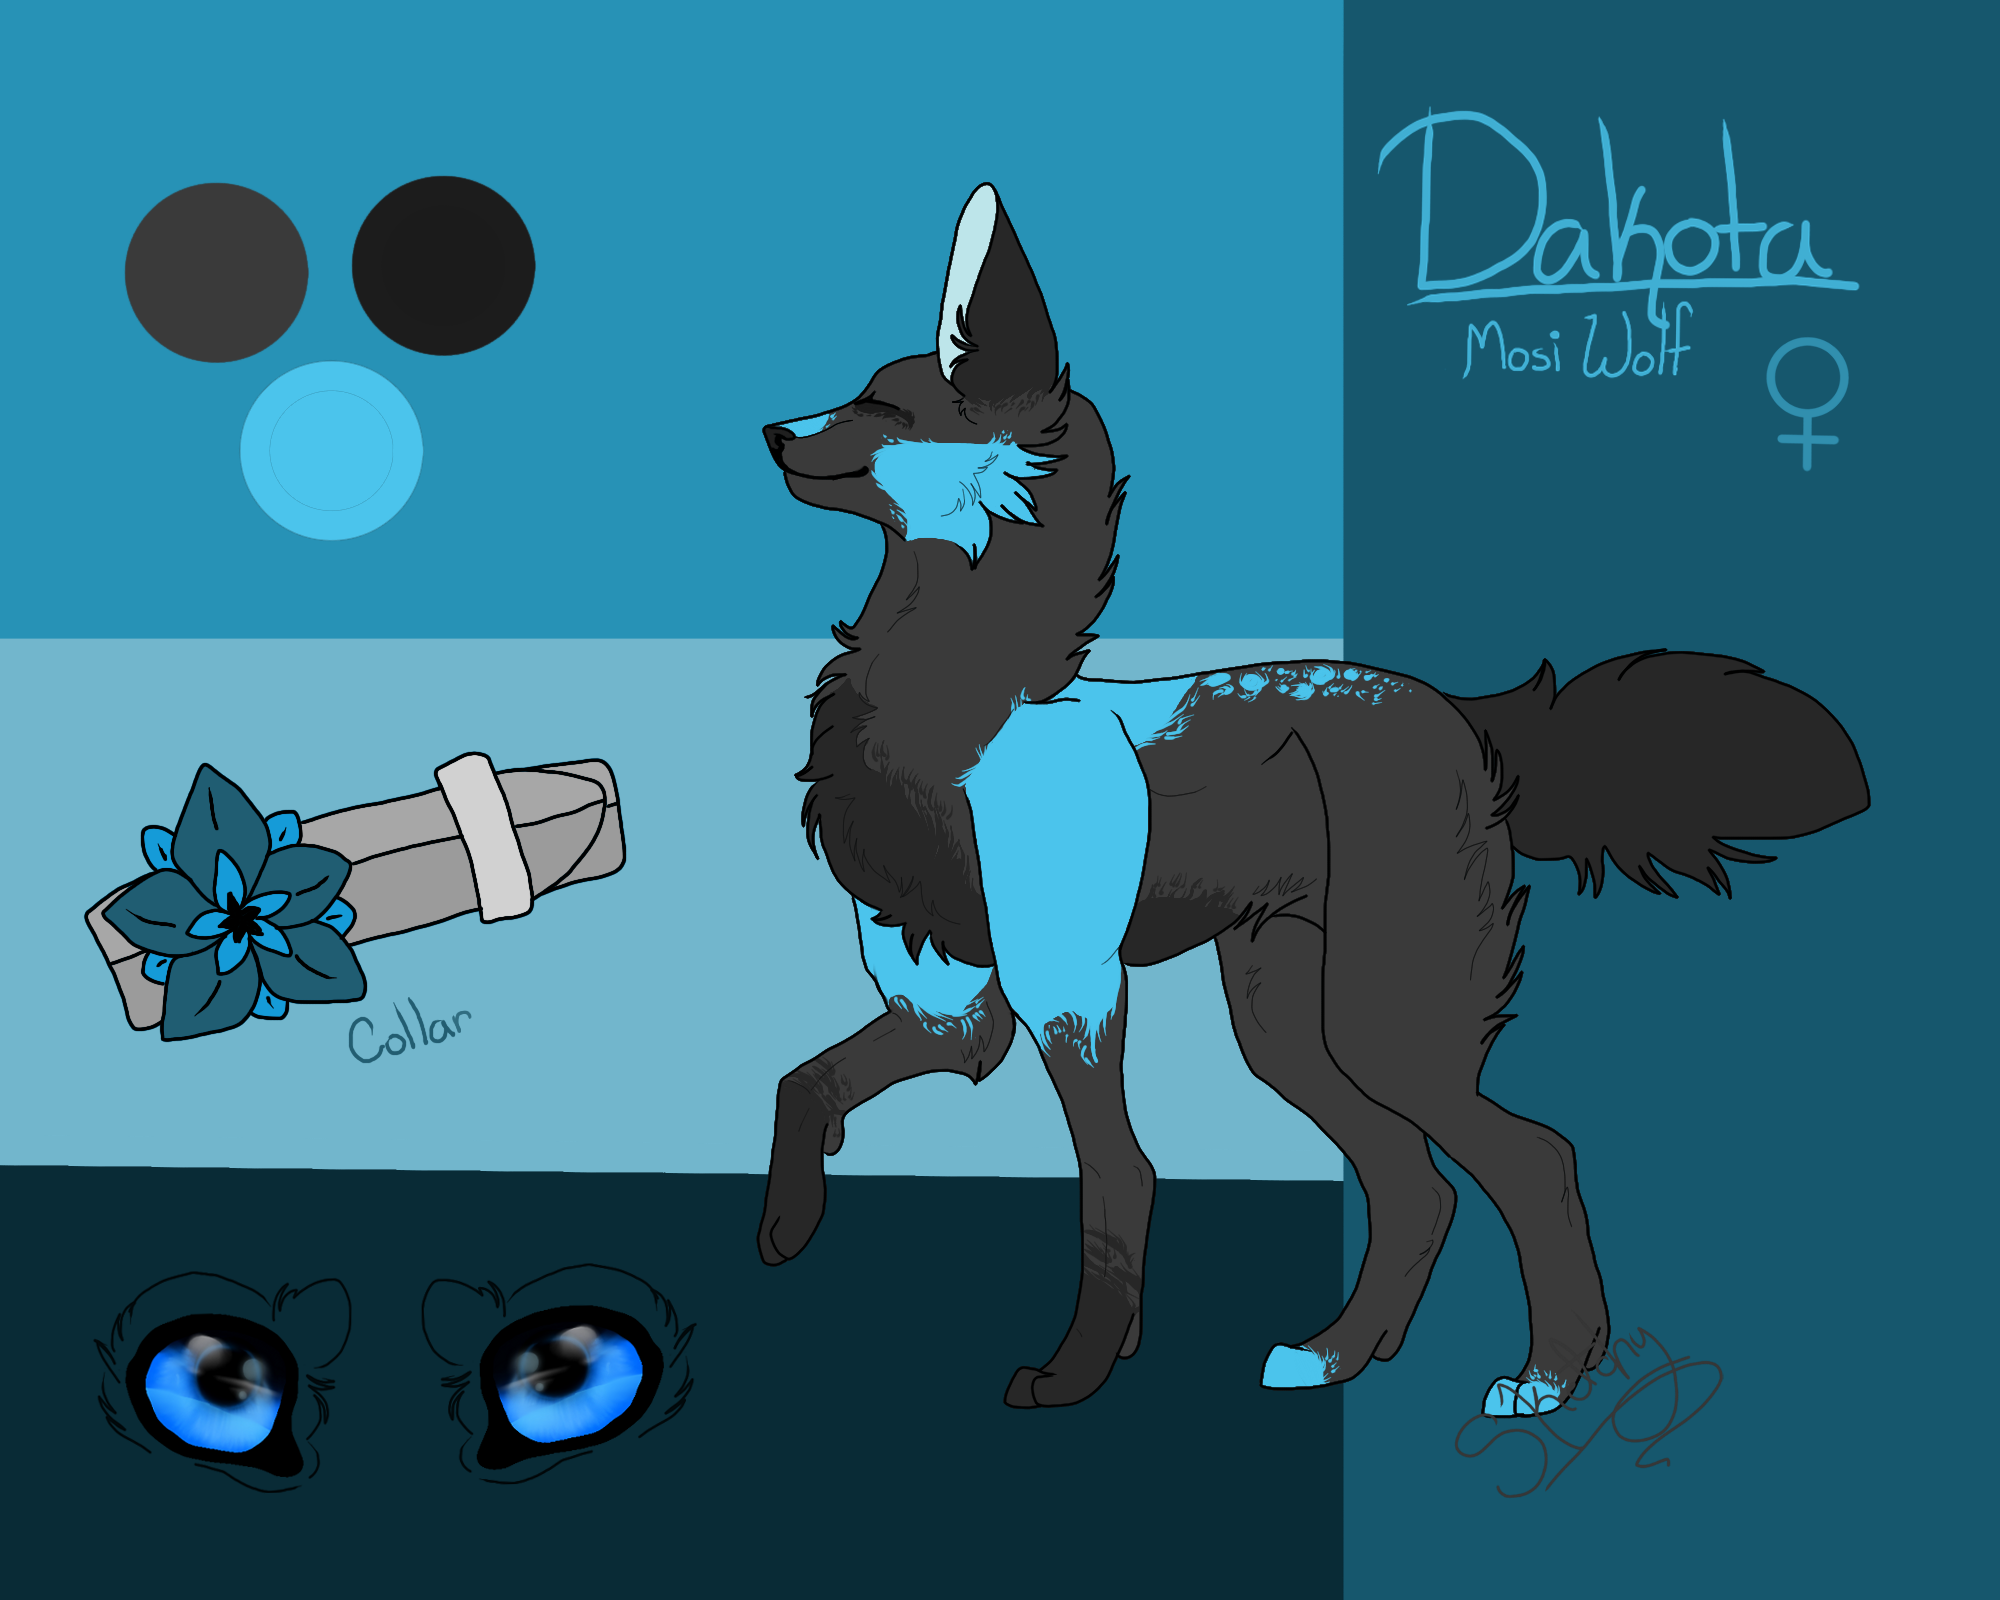 Dakota Oc Mosi Wolf Character Reference Sheet By Sketchyodoodles On Deviantart